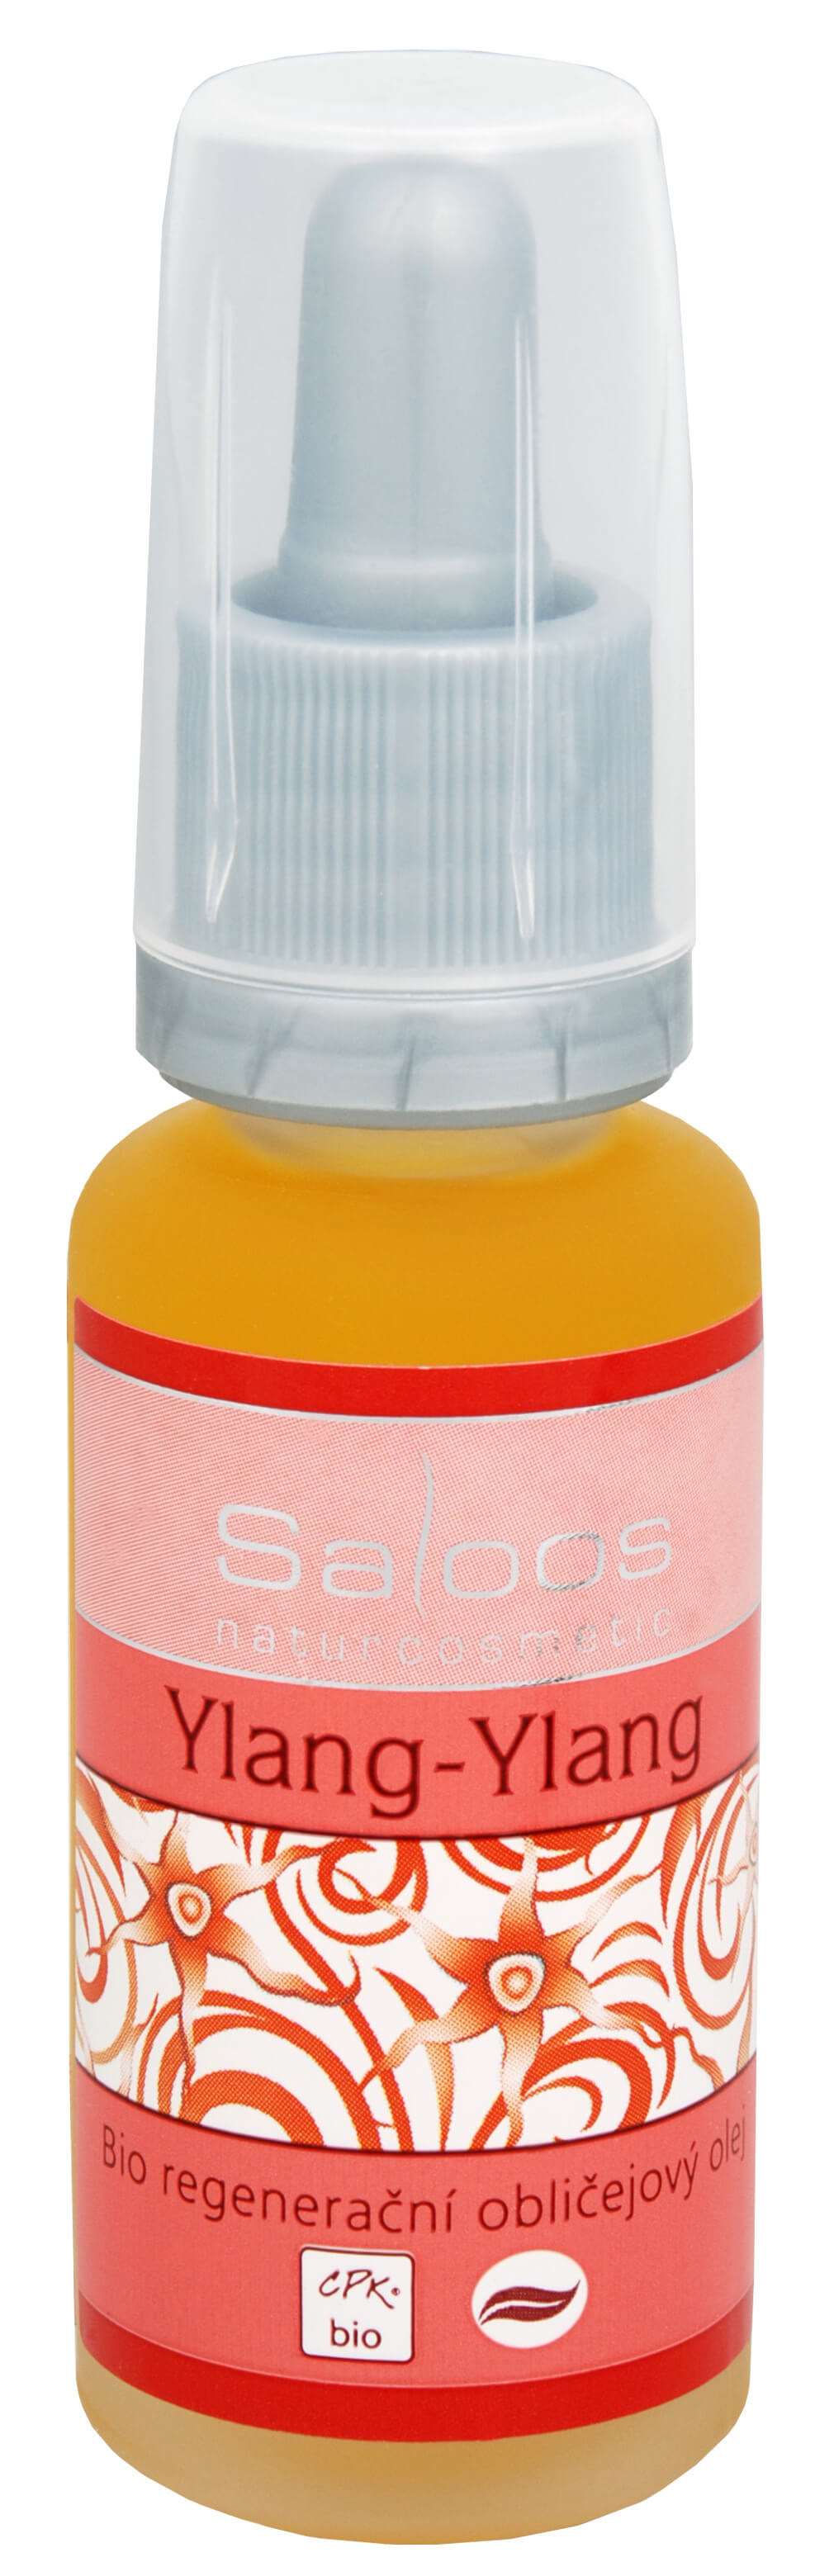 Saloos Bio regenerační obličejový olej - Ylang-ylang 20 ml